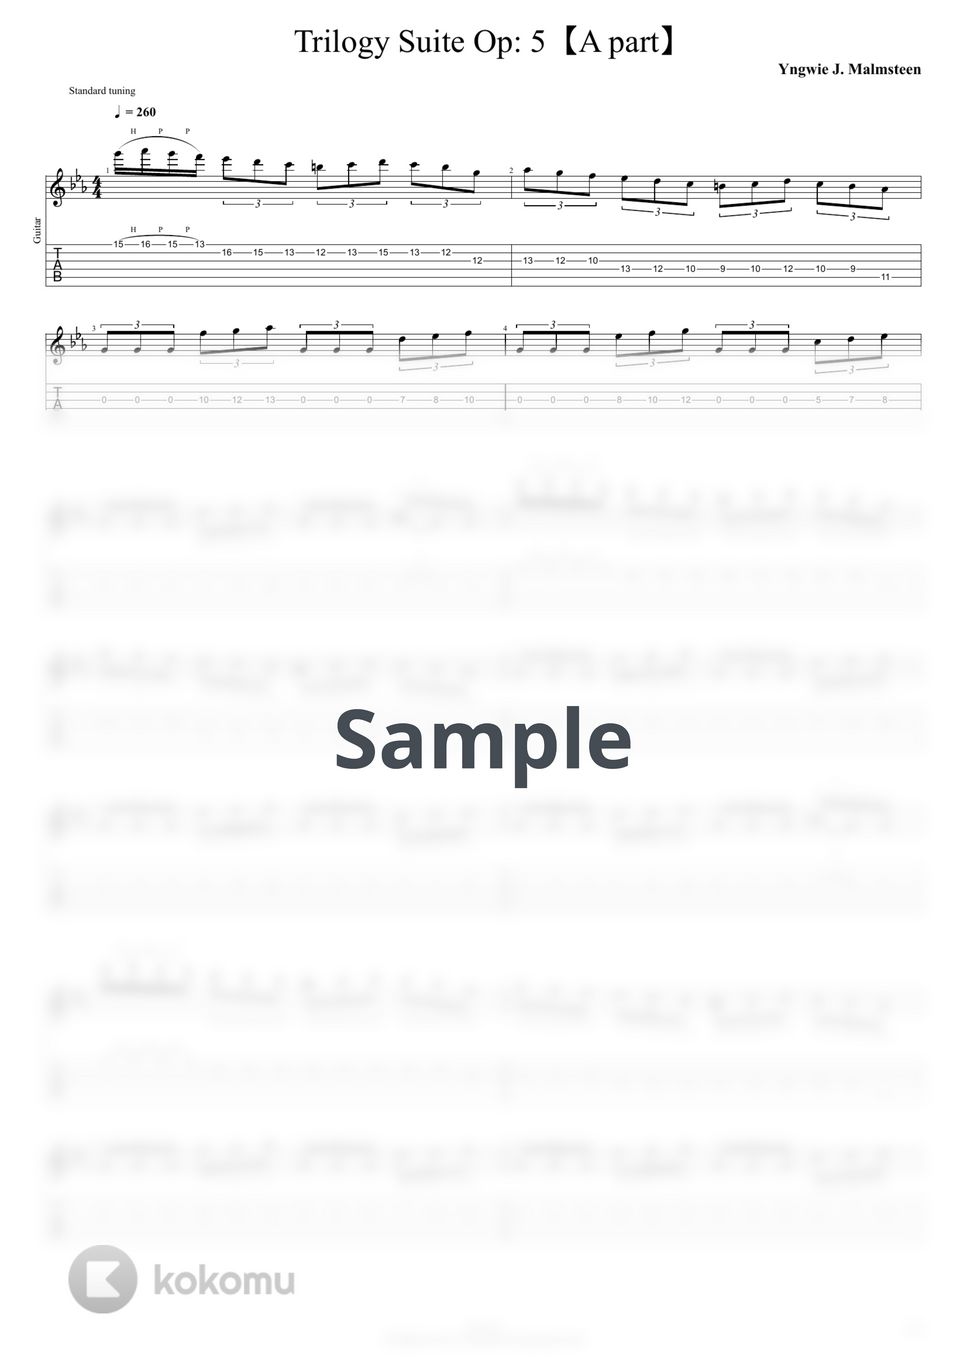 Yngwie Malmsteen - Trilogy Suite Op: 5 - Yngwie Malmsteen Intro 0:15~0:39 (TAB PDF & Guitar Pro files.（gp5）) by Technical Guitar